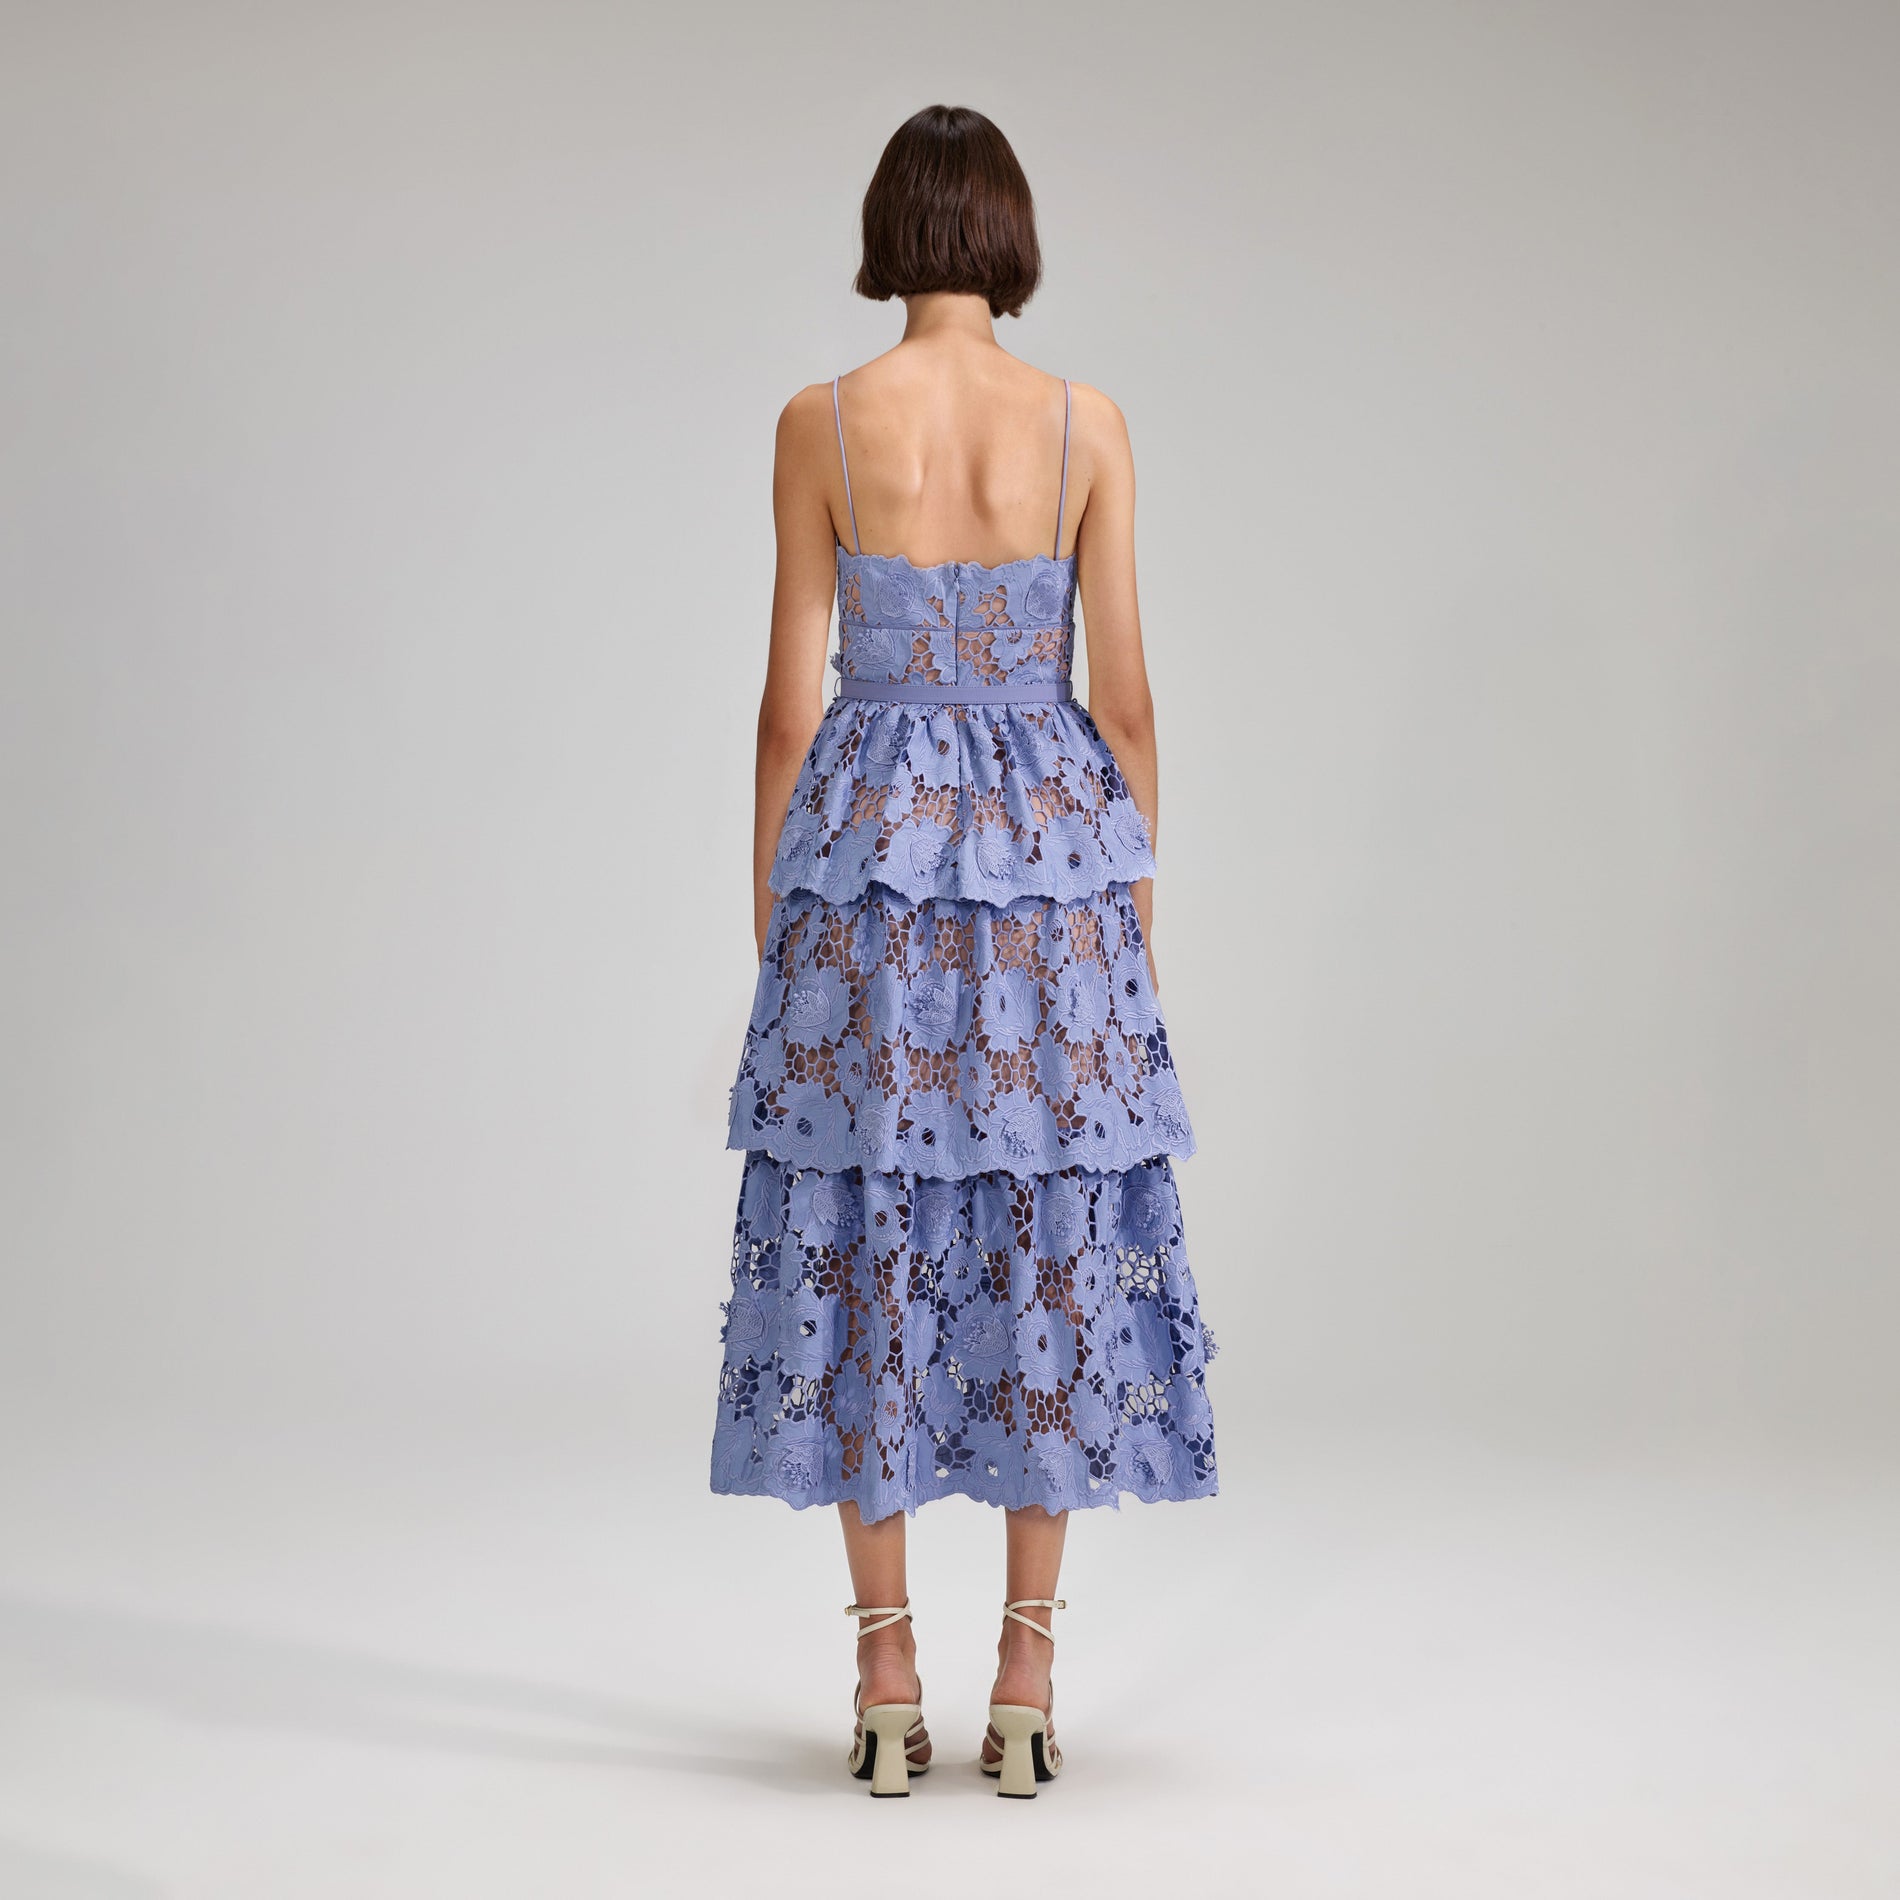 A woman wearing the Lilac 3D Cotton Lace Midi Dress